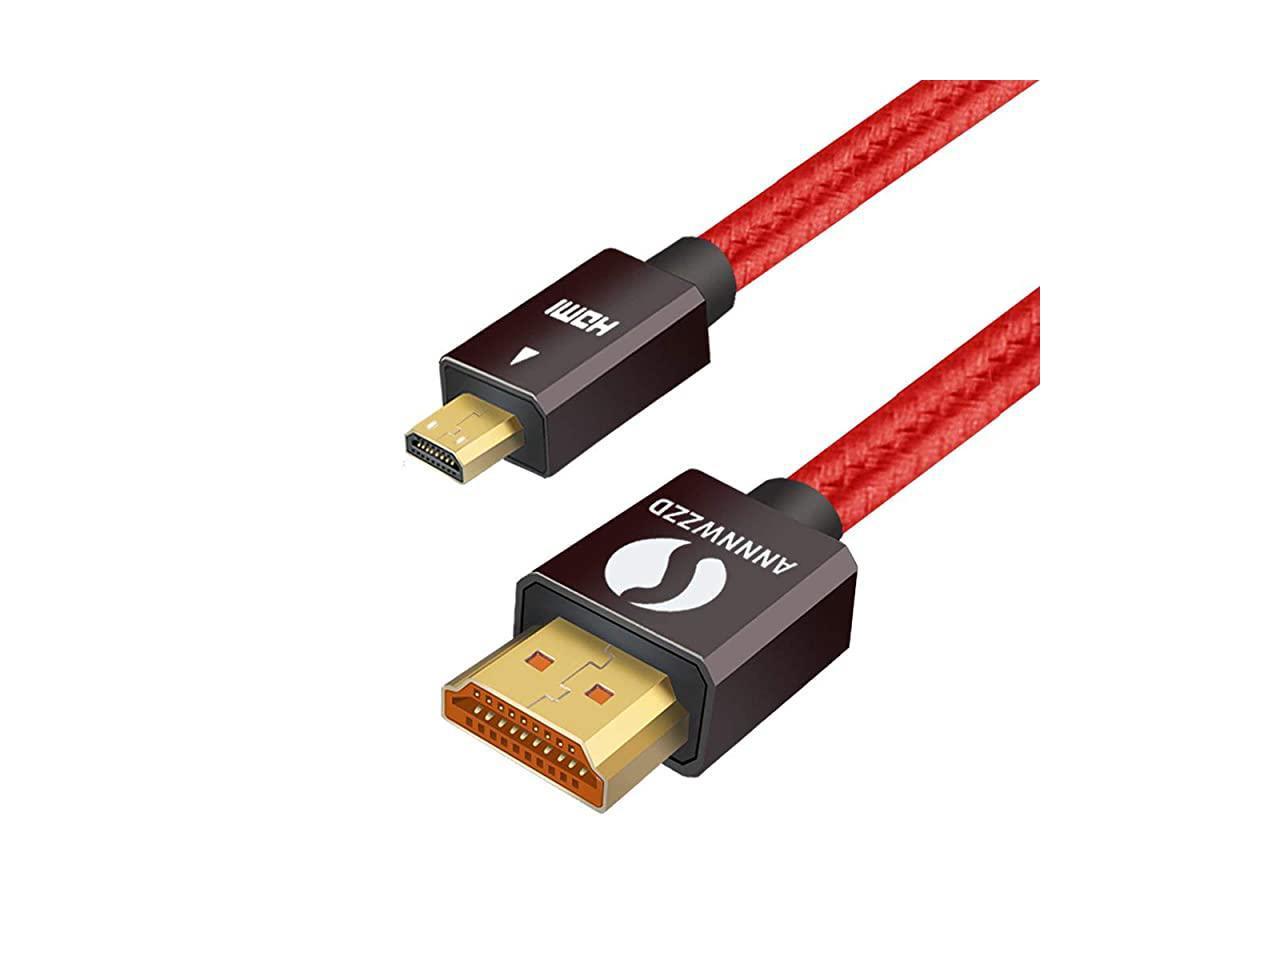 Elebase Micro HDMI Cable 10 FT,4K 60Hz Micro HDMI Type D Cord Compatible for Raspberry Pi 4 4b,GoPro Black Hero 7 6 5 4,Sony Camera A6000 A6300,Nikon B500,Lenovo Yoga 3 Pro 710,Canon 